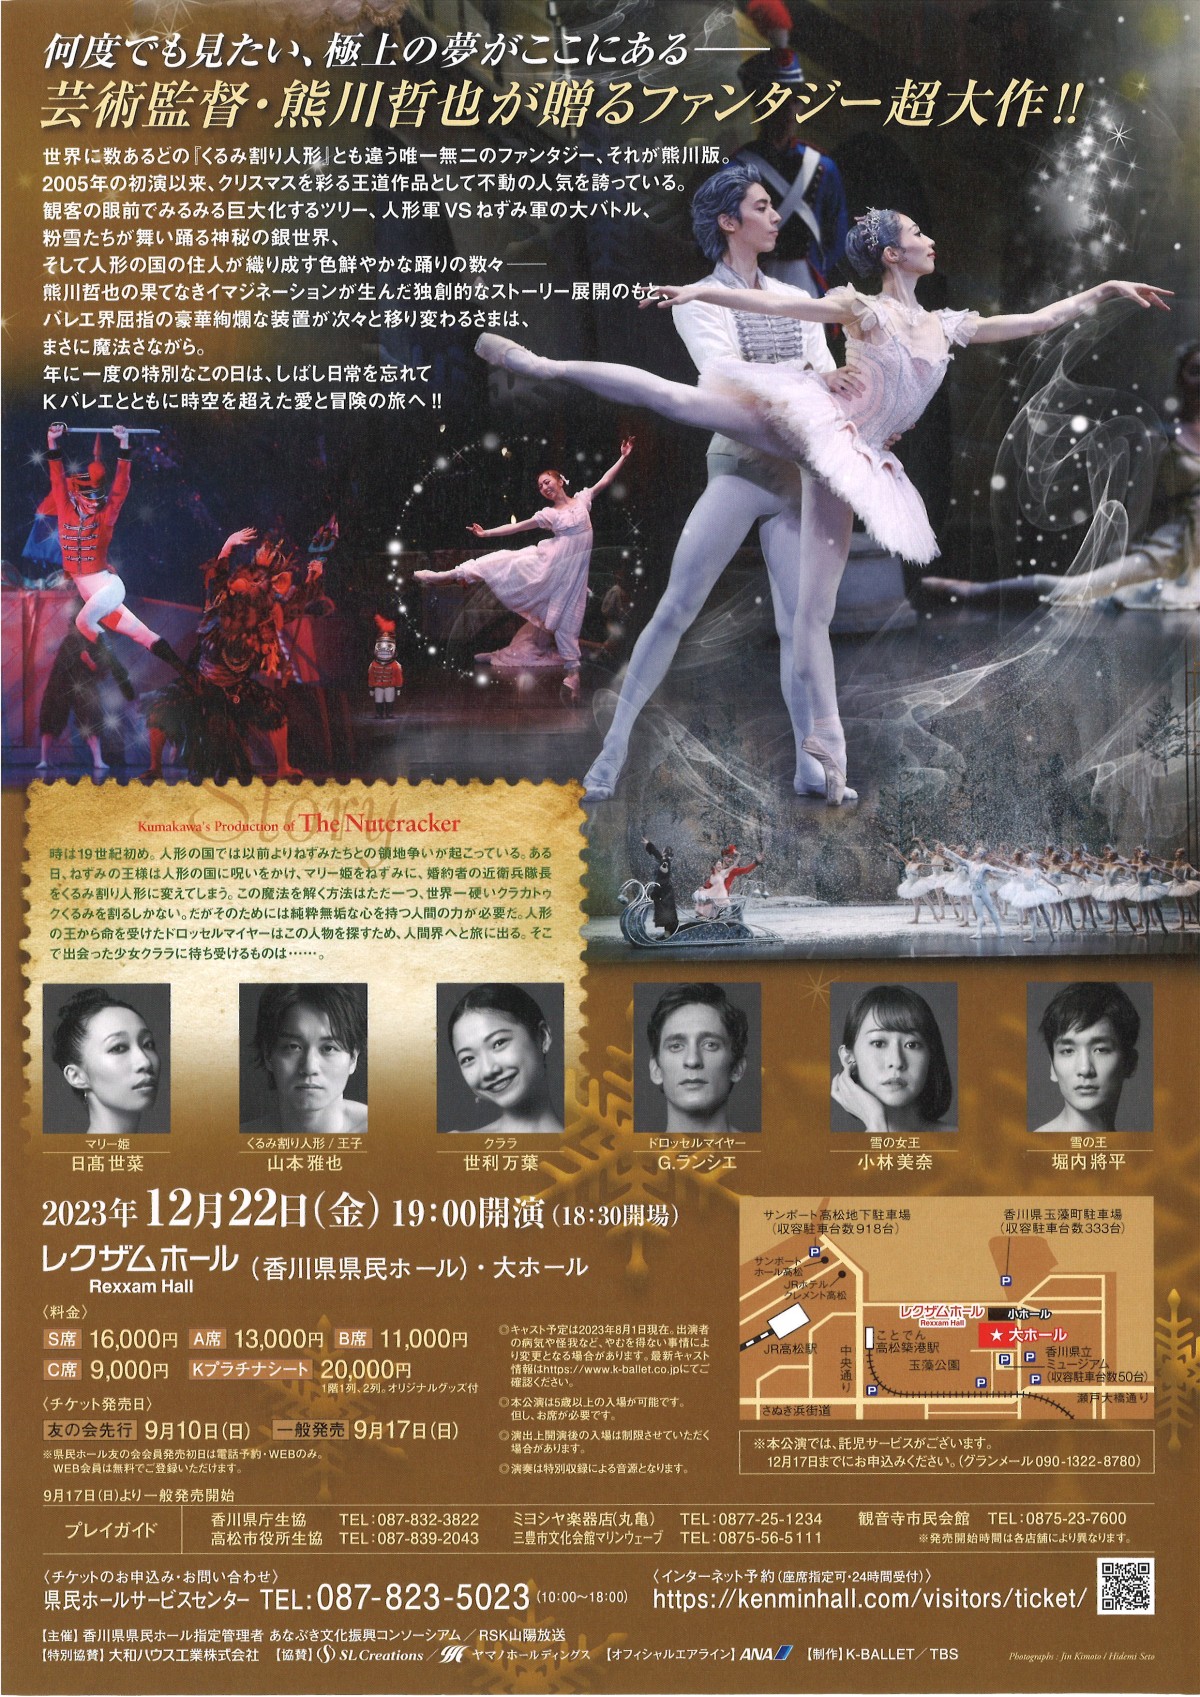 Daiwa House ®PRESENTS 熊川哲也 K-BALLET TOKYO Winter Tour 2023